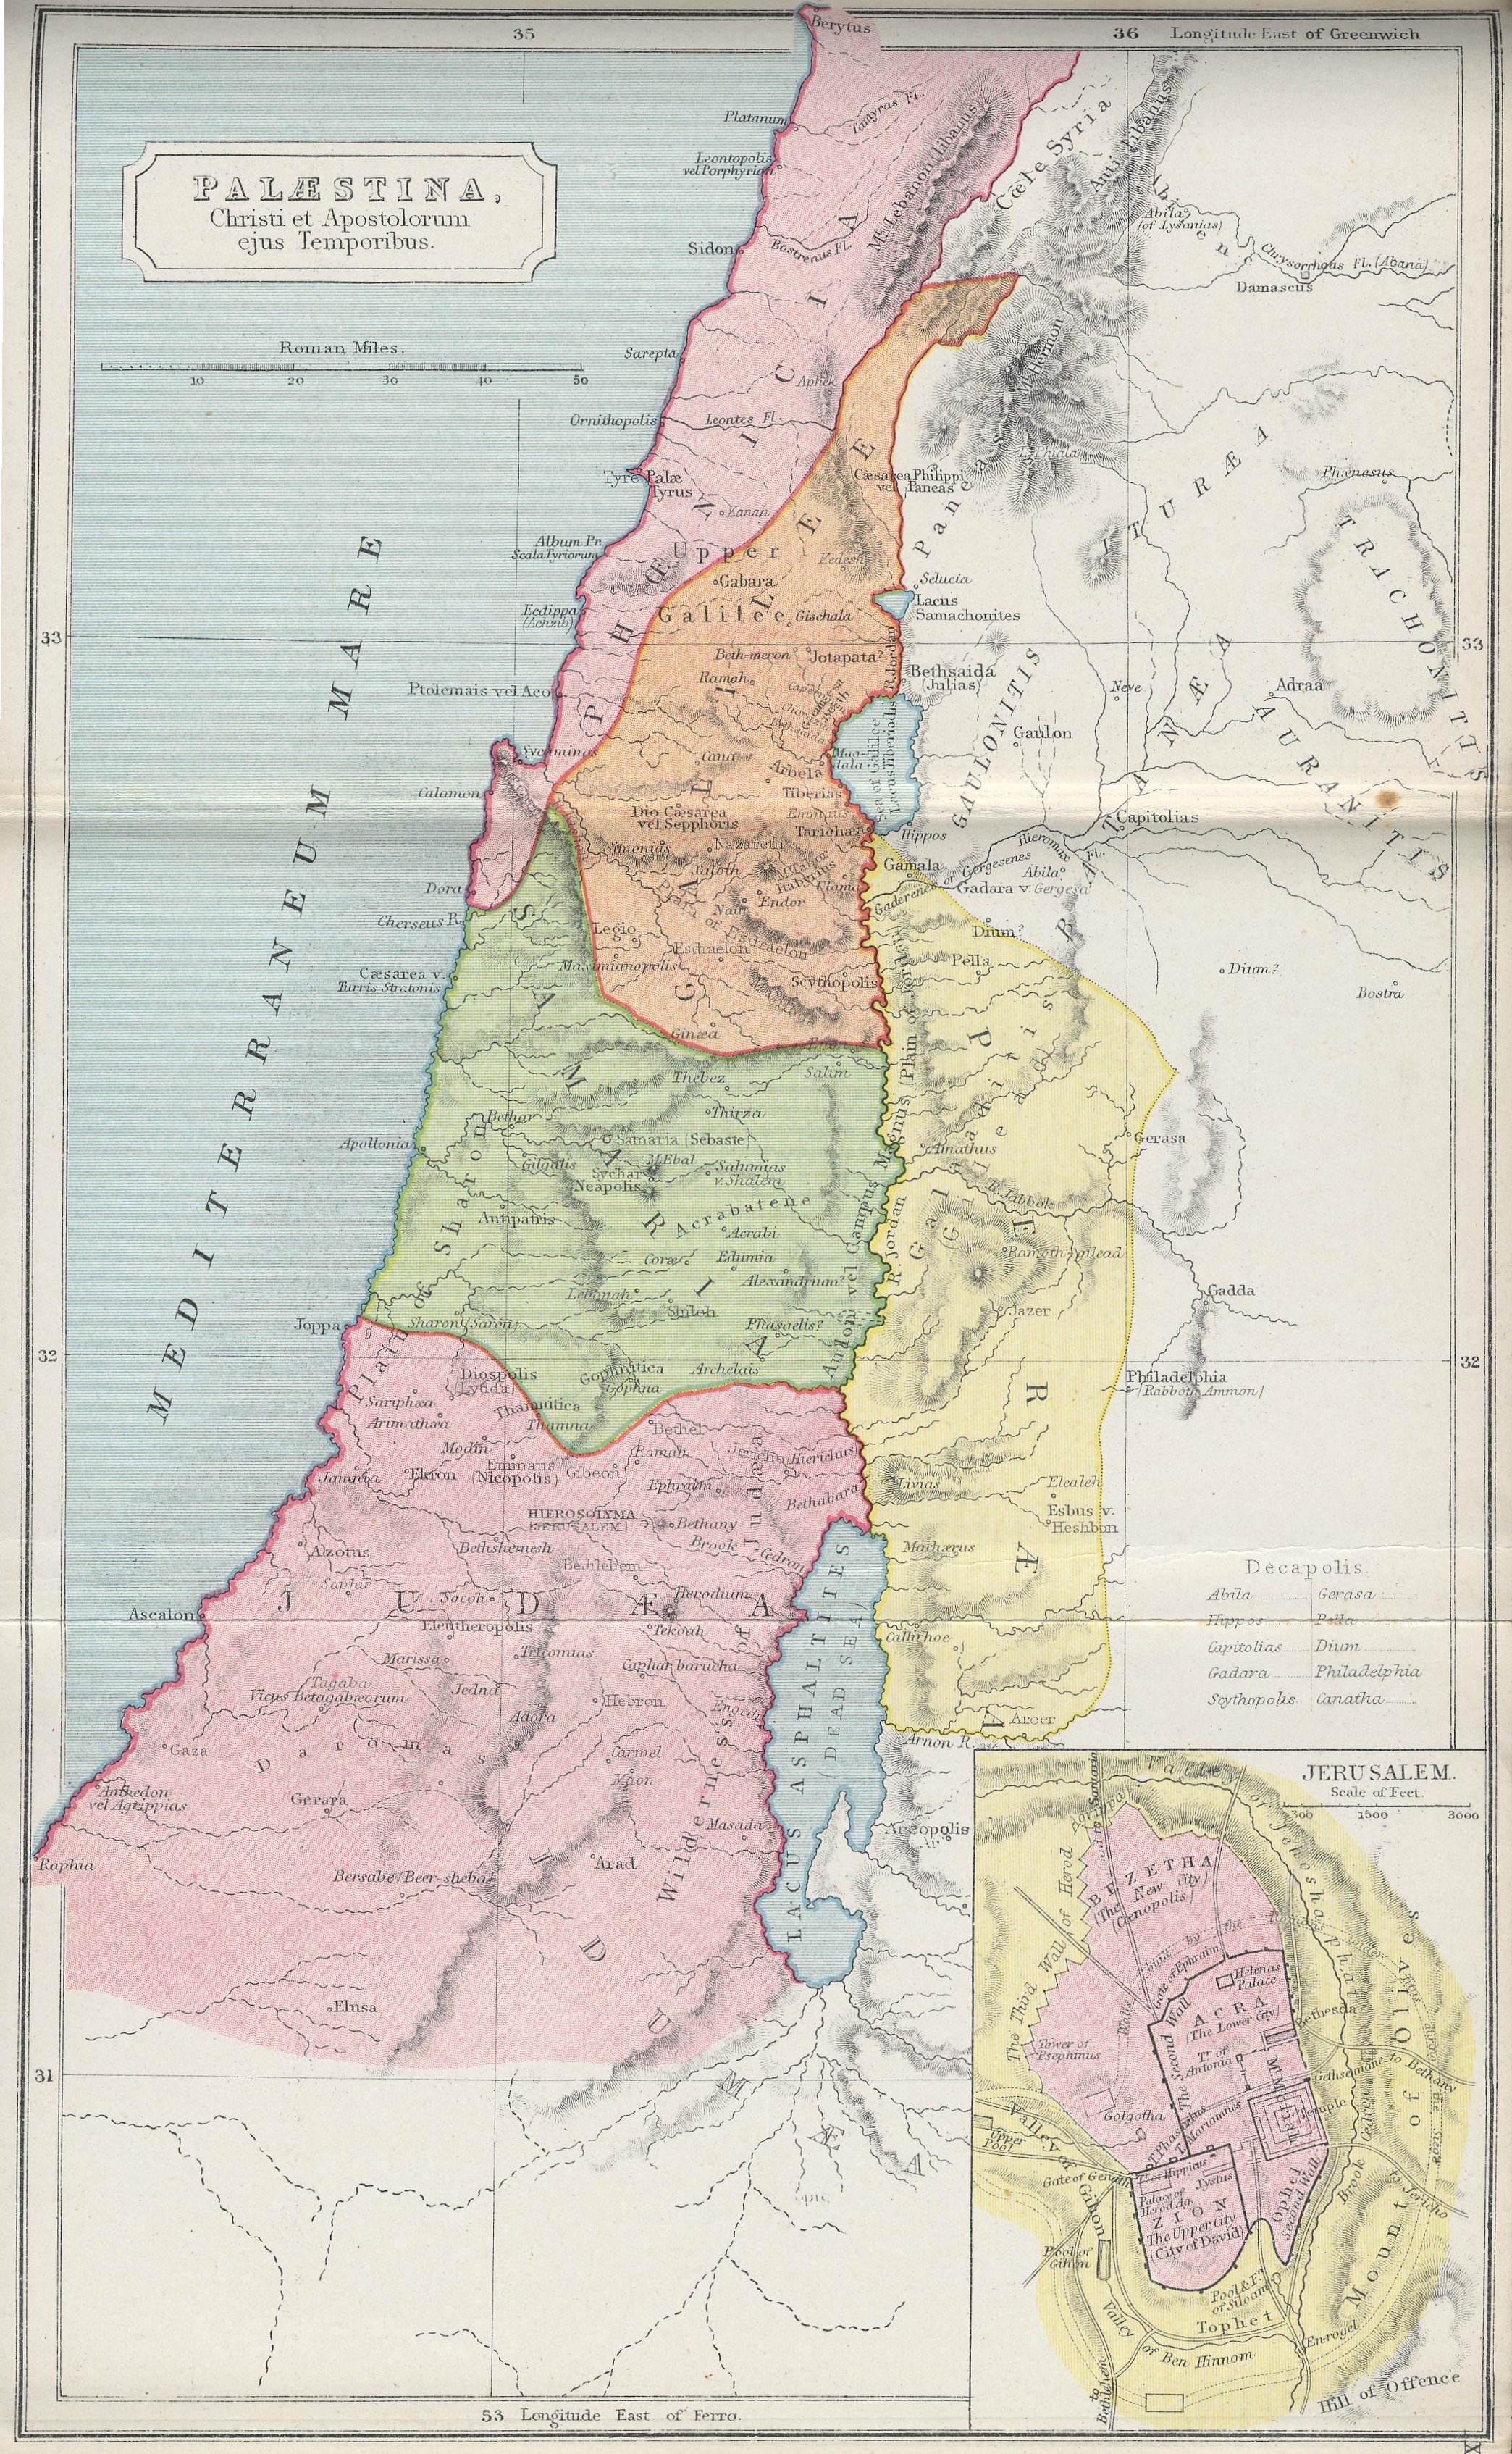 Map of Palestine 70 BC - AD 180